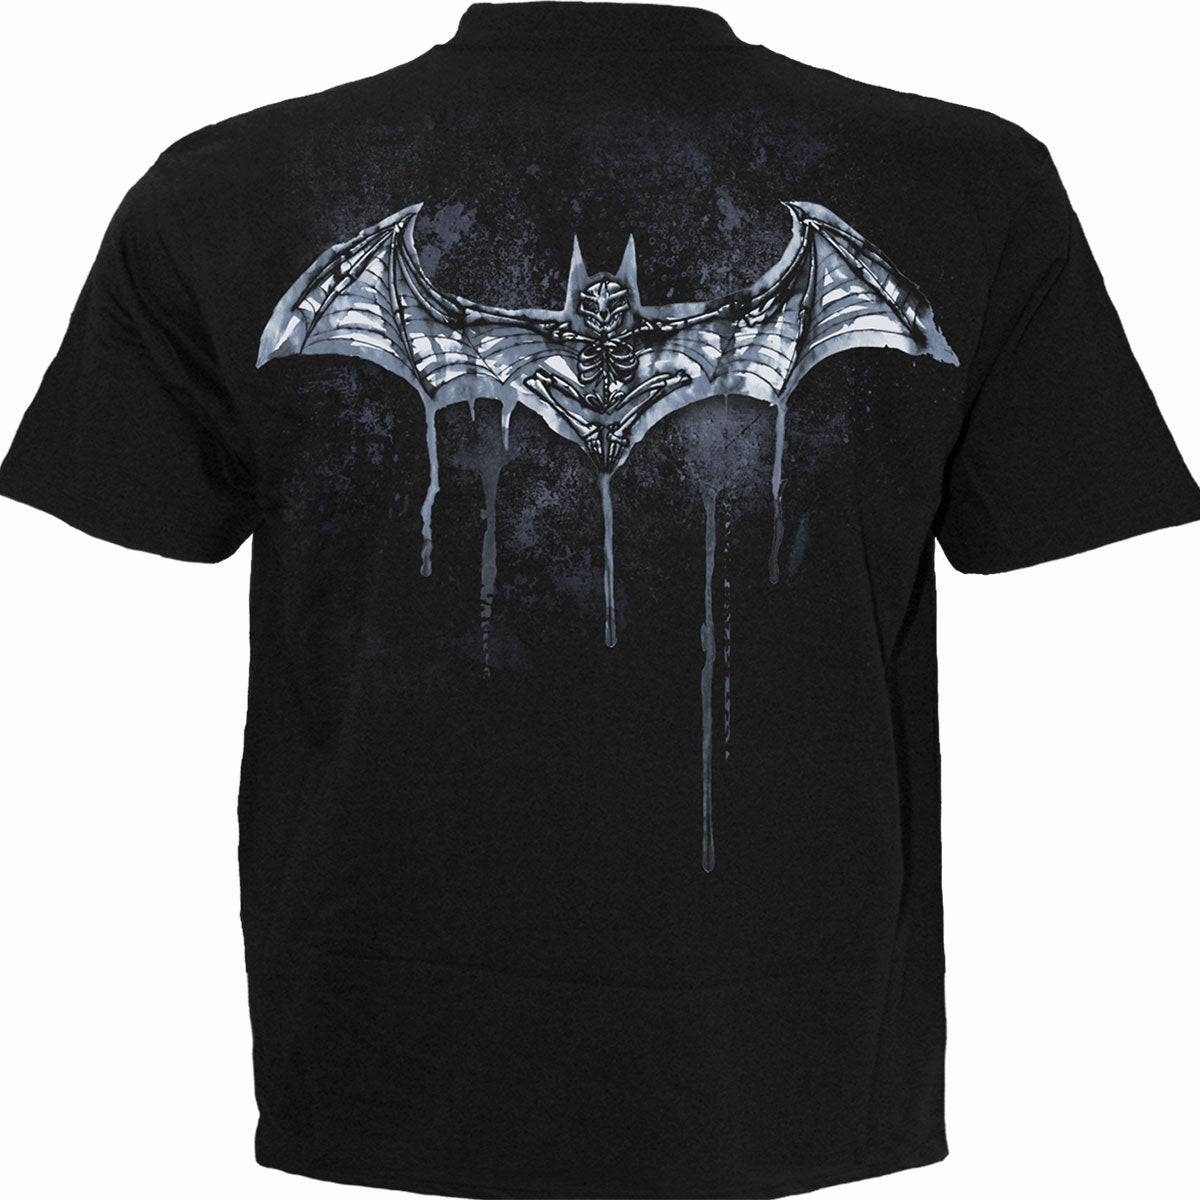 BATMAN - NOCTURNAL - Koszulka czarna